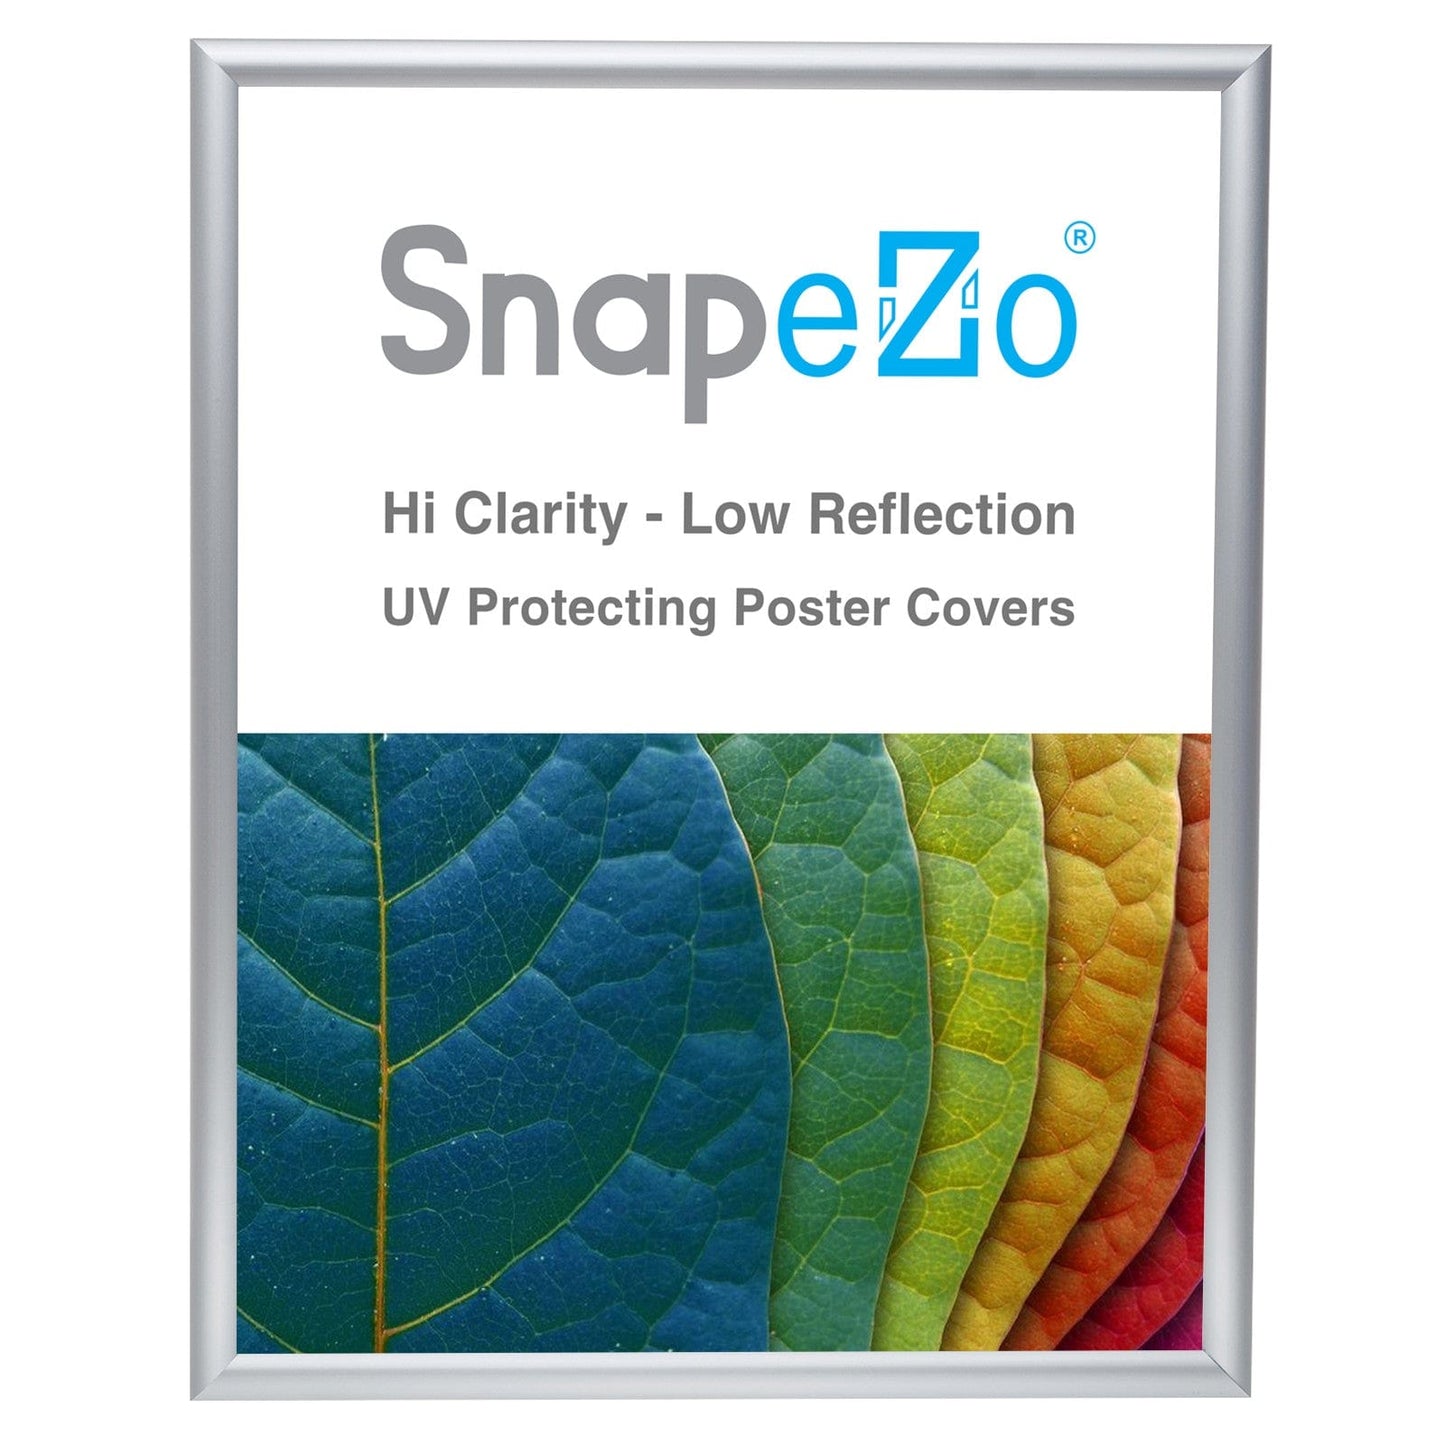 17x22 Silver SnapeZo® Snap Frame - 1" Profile - Snap Frames Direct